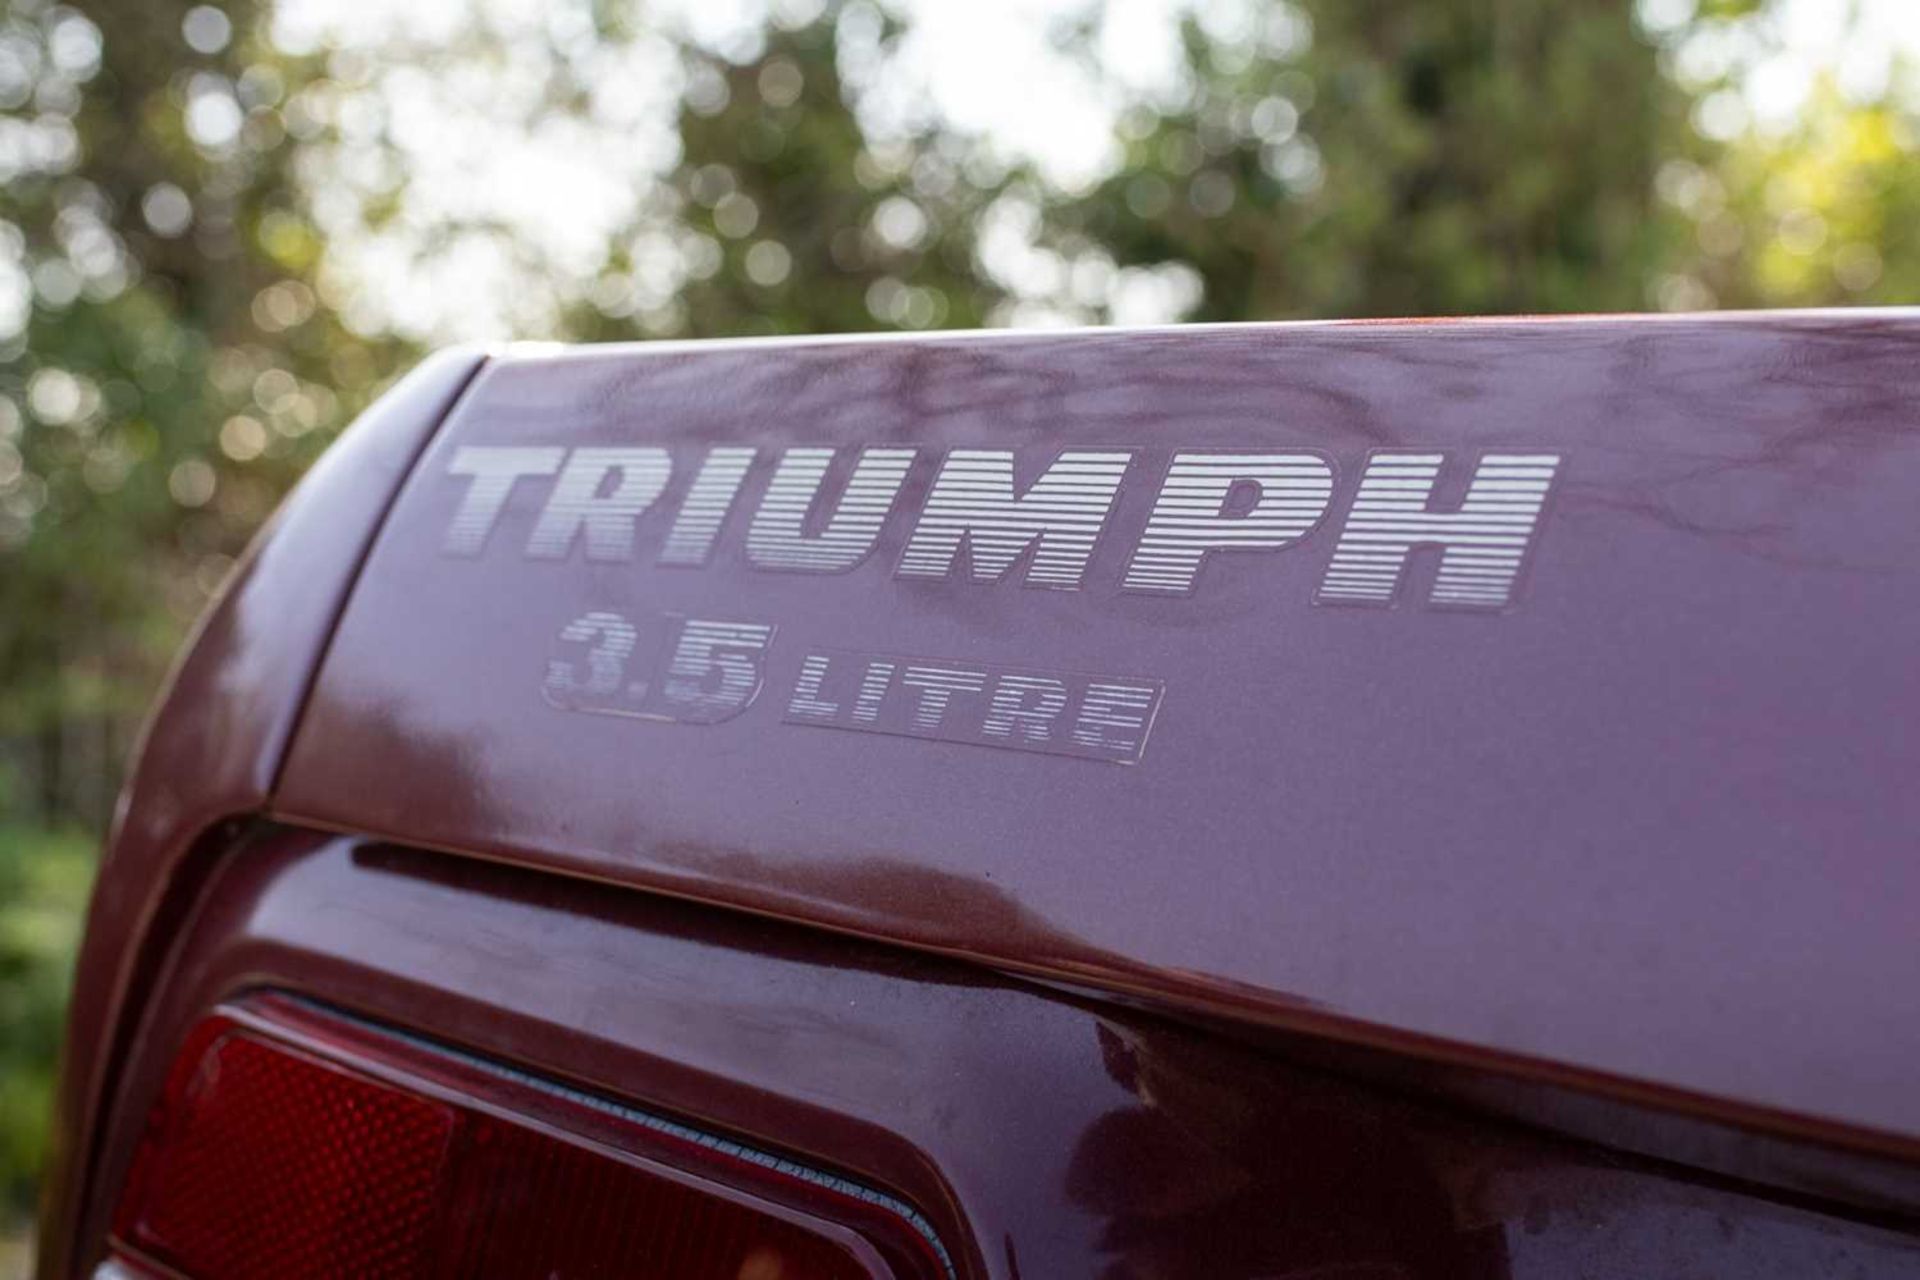 1981 Triumph TR7 Convertible V8 engine conversion *** NO RESERVE *** - Image 16 of 87